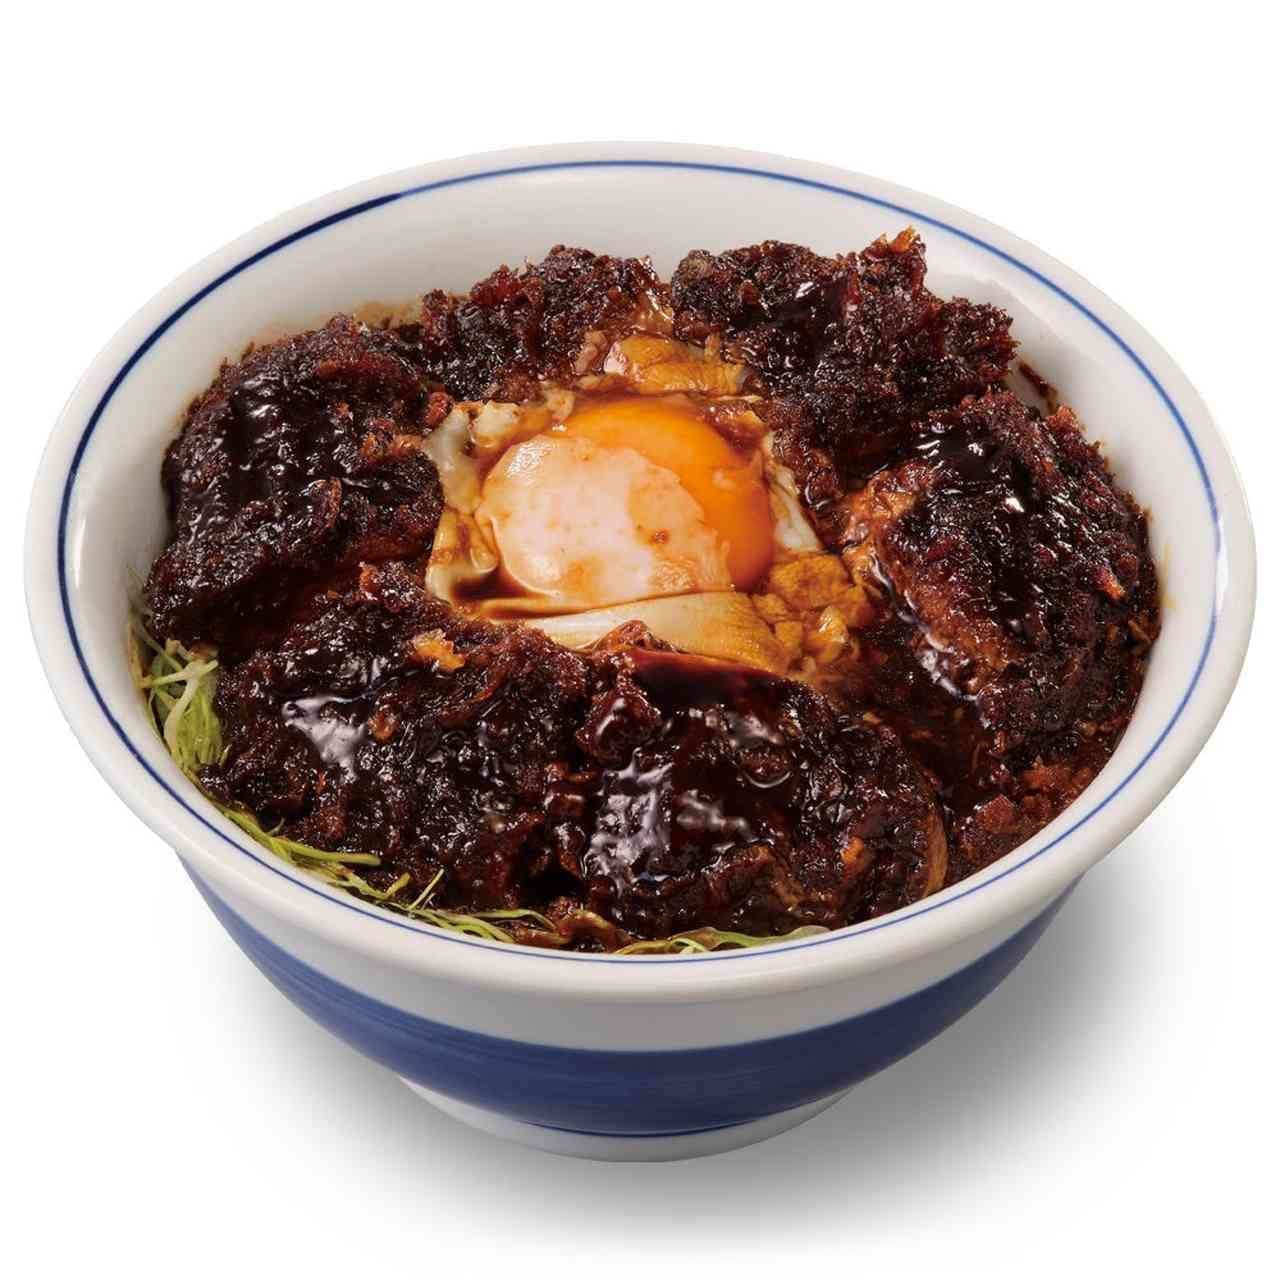 Katsuya "Miso-tamakatsu-don" (pork cutlet served on top of a bowl of rice)